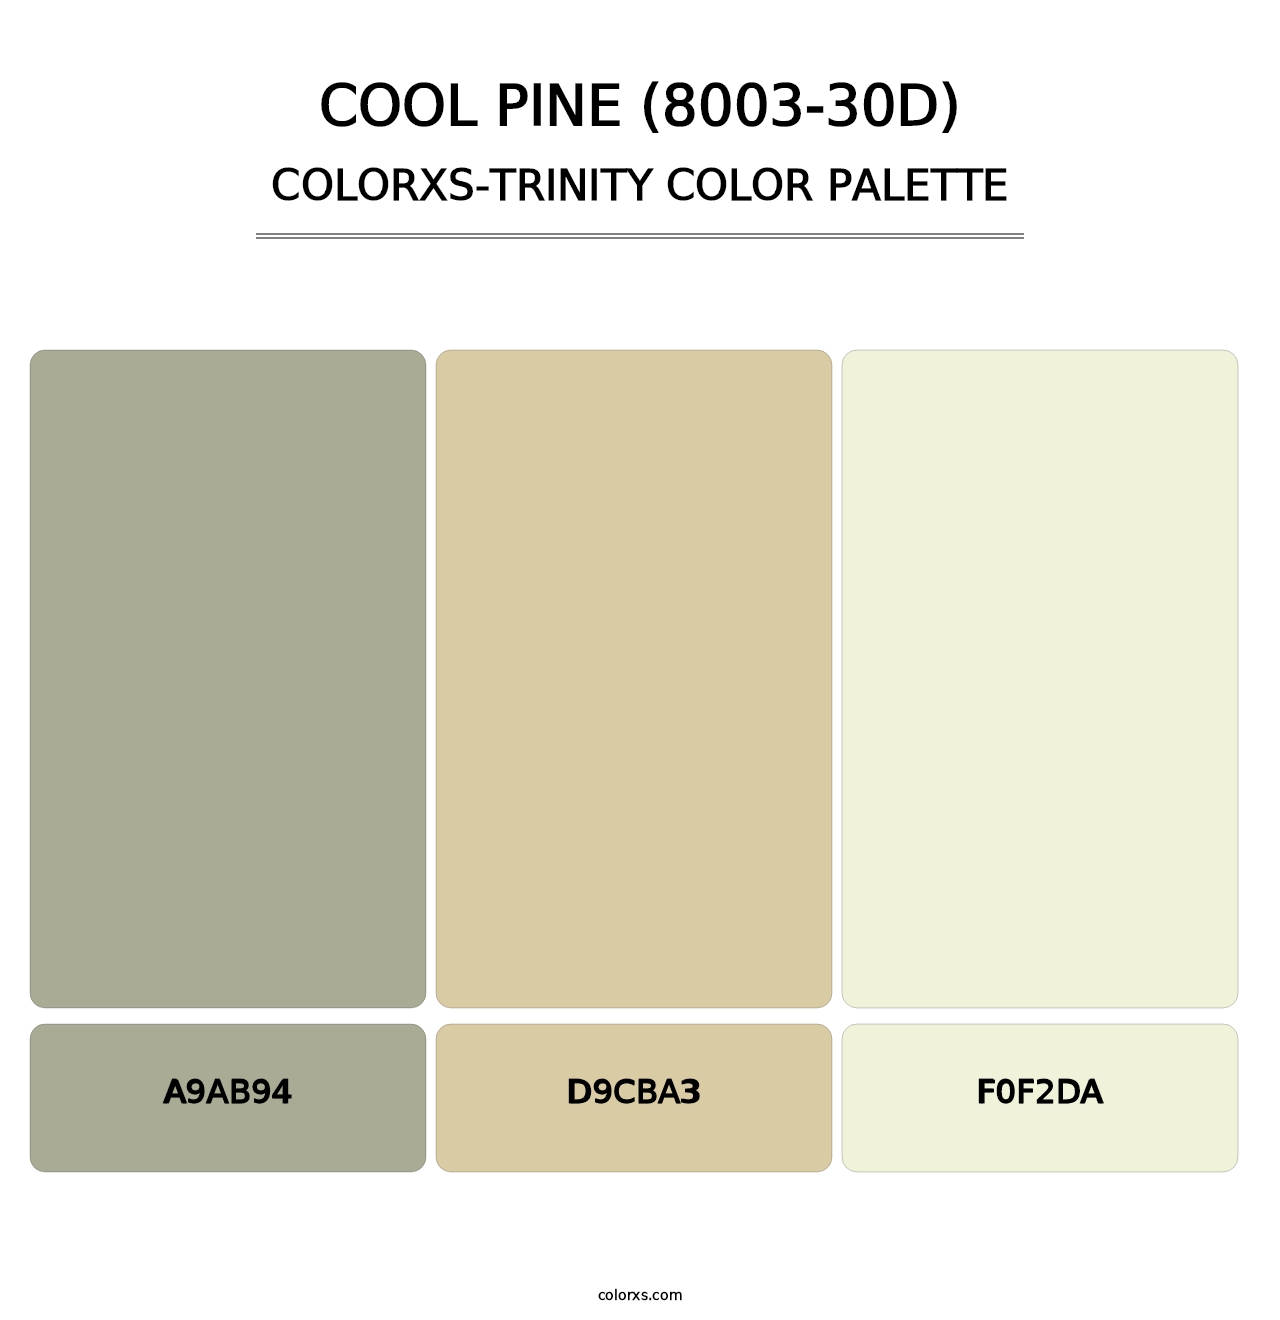 Cool Pine (8003-30D) - Colorxs Trinity Palette